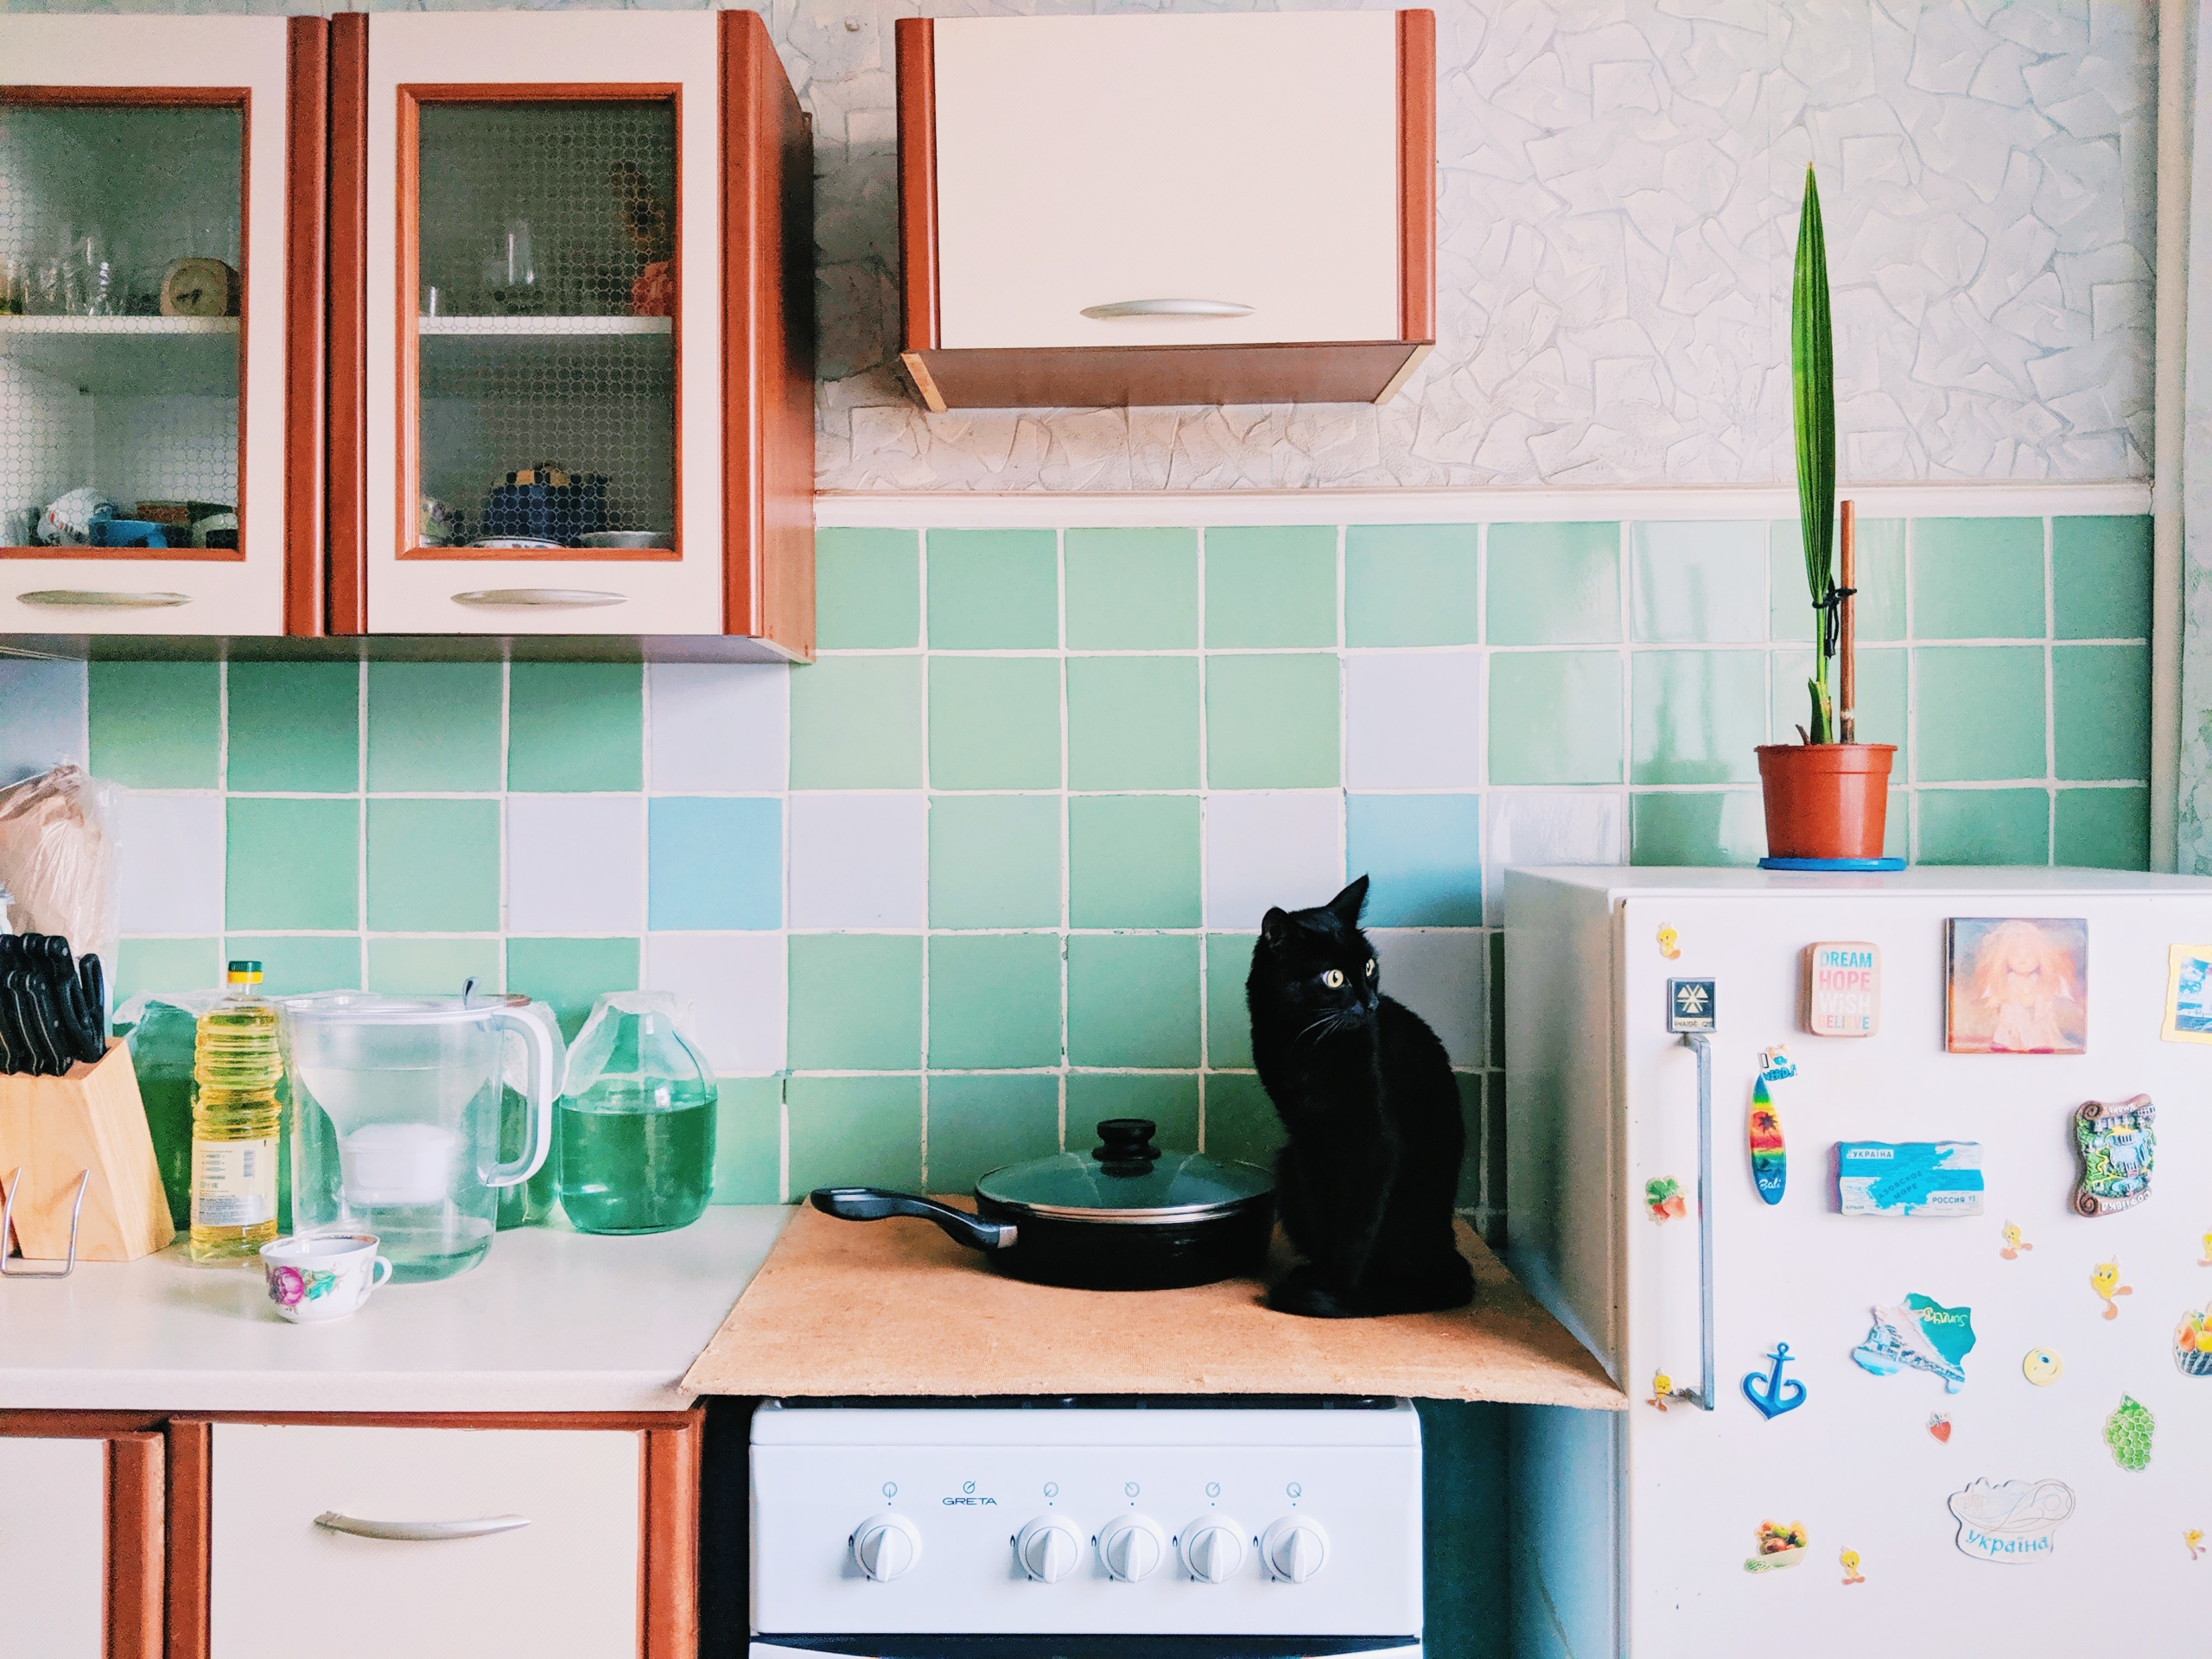 black cat sitting on counter staring at refrigerator